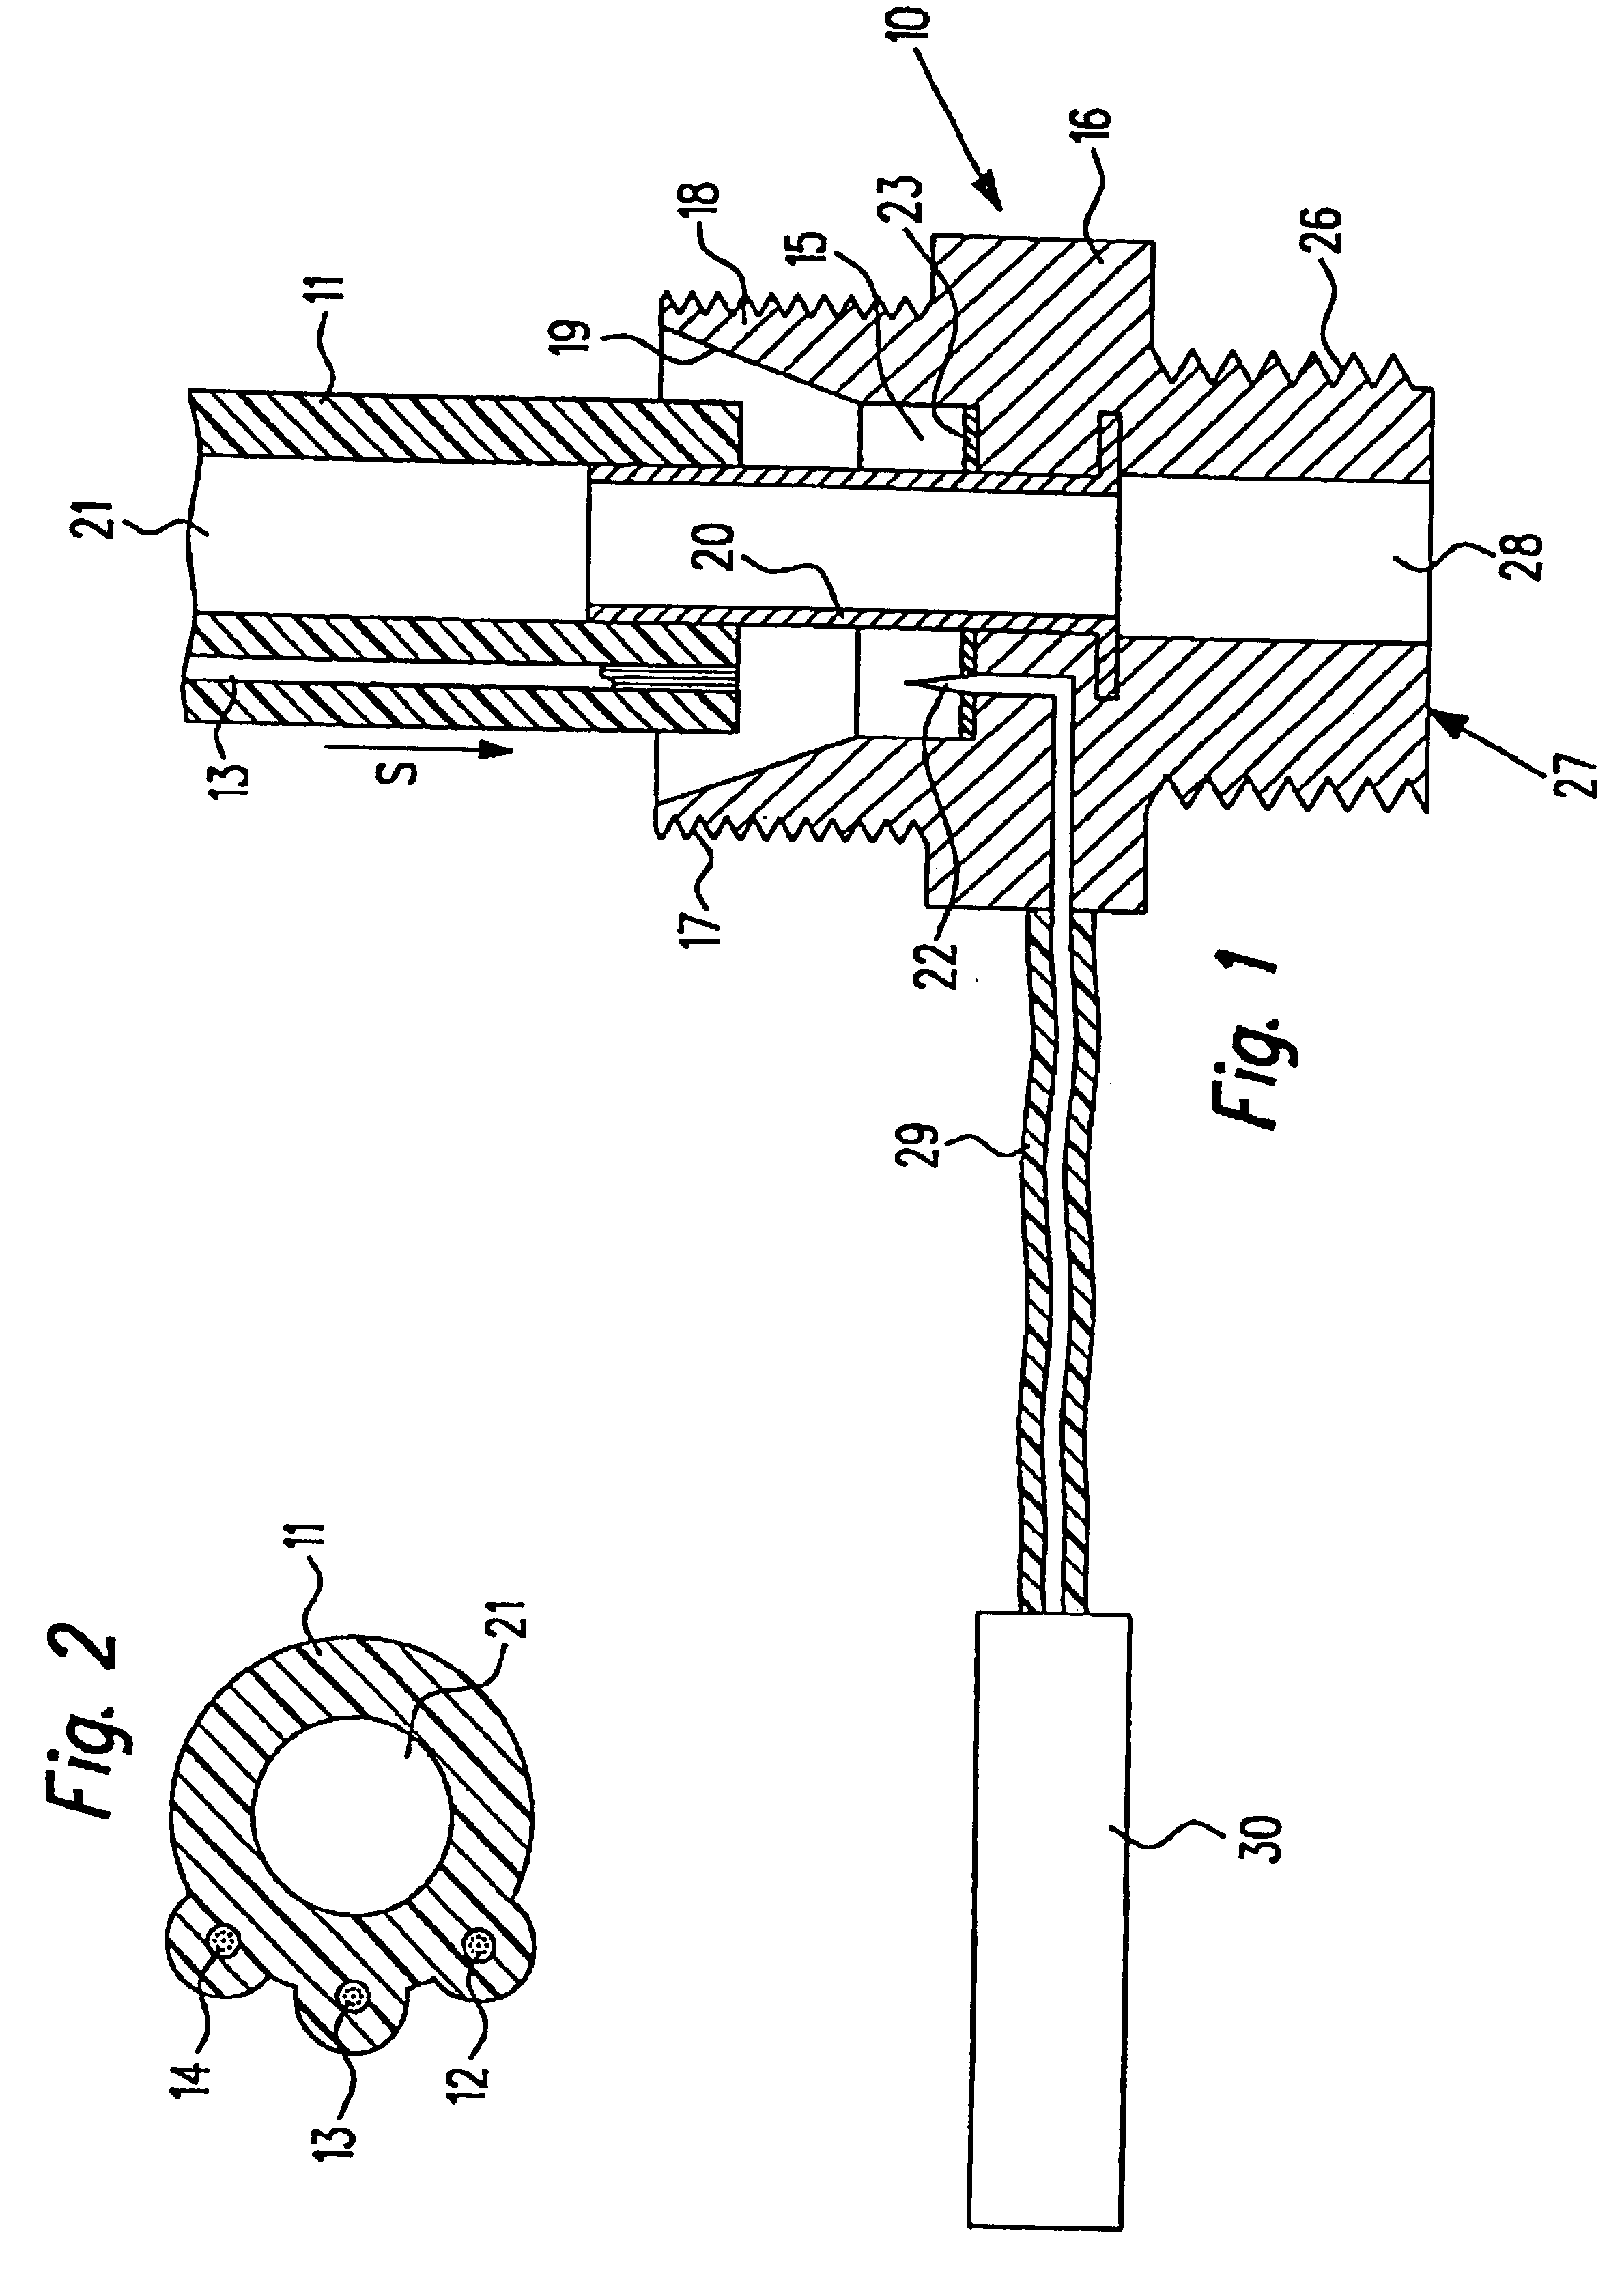 Connector piece for flexible plastic conduits, comprising a sensor assembly